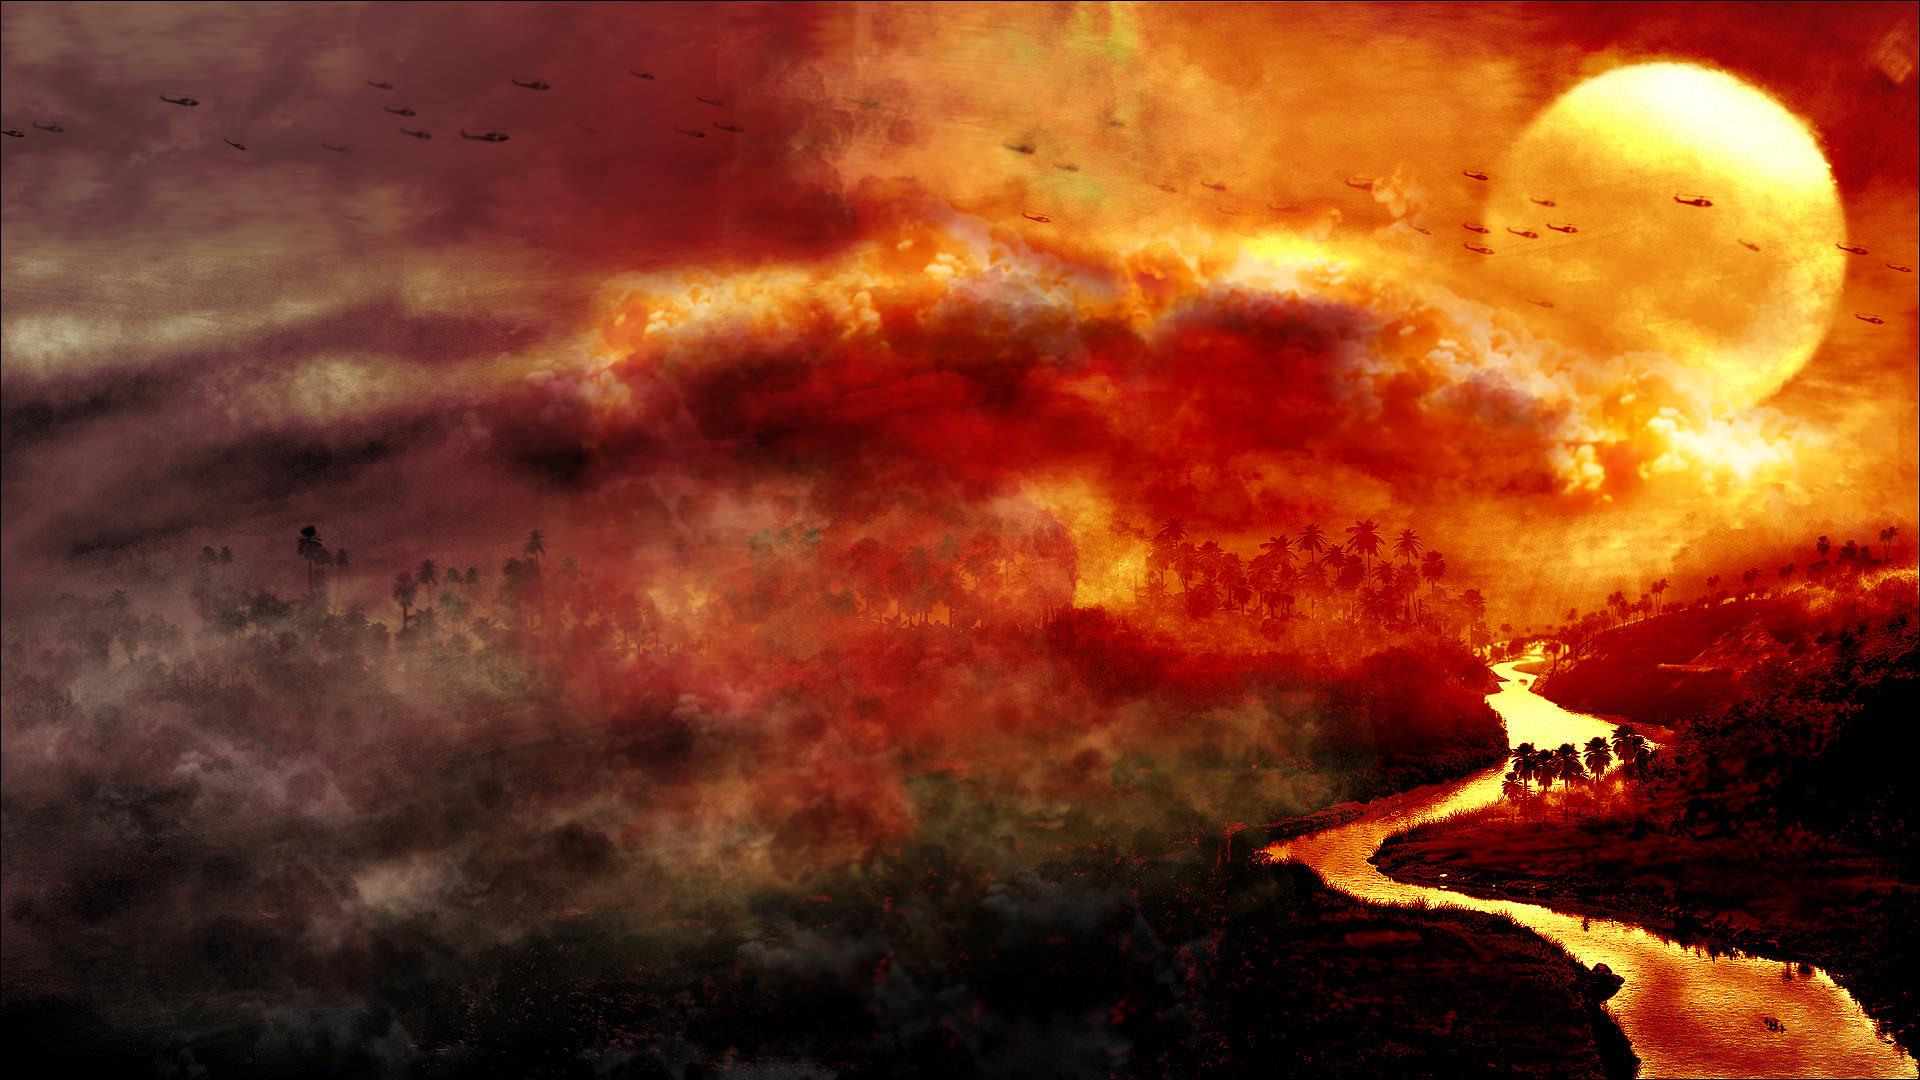 Apocalypse Now wallpaper 1920x1080 Full HD (1080p) desktop background